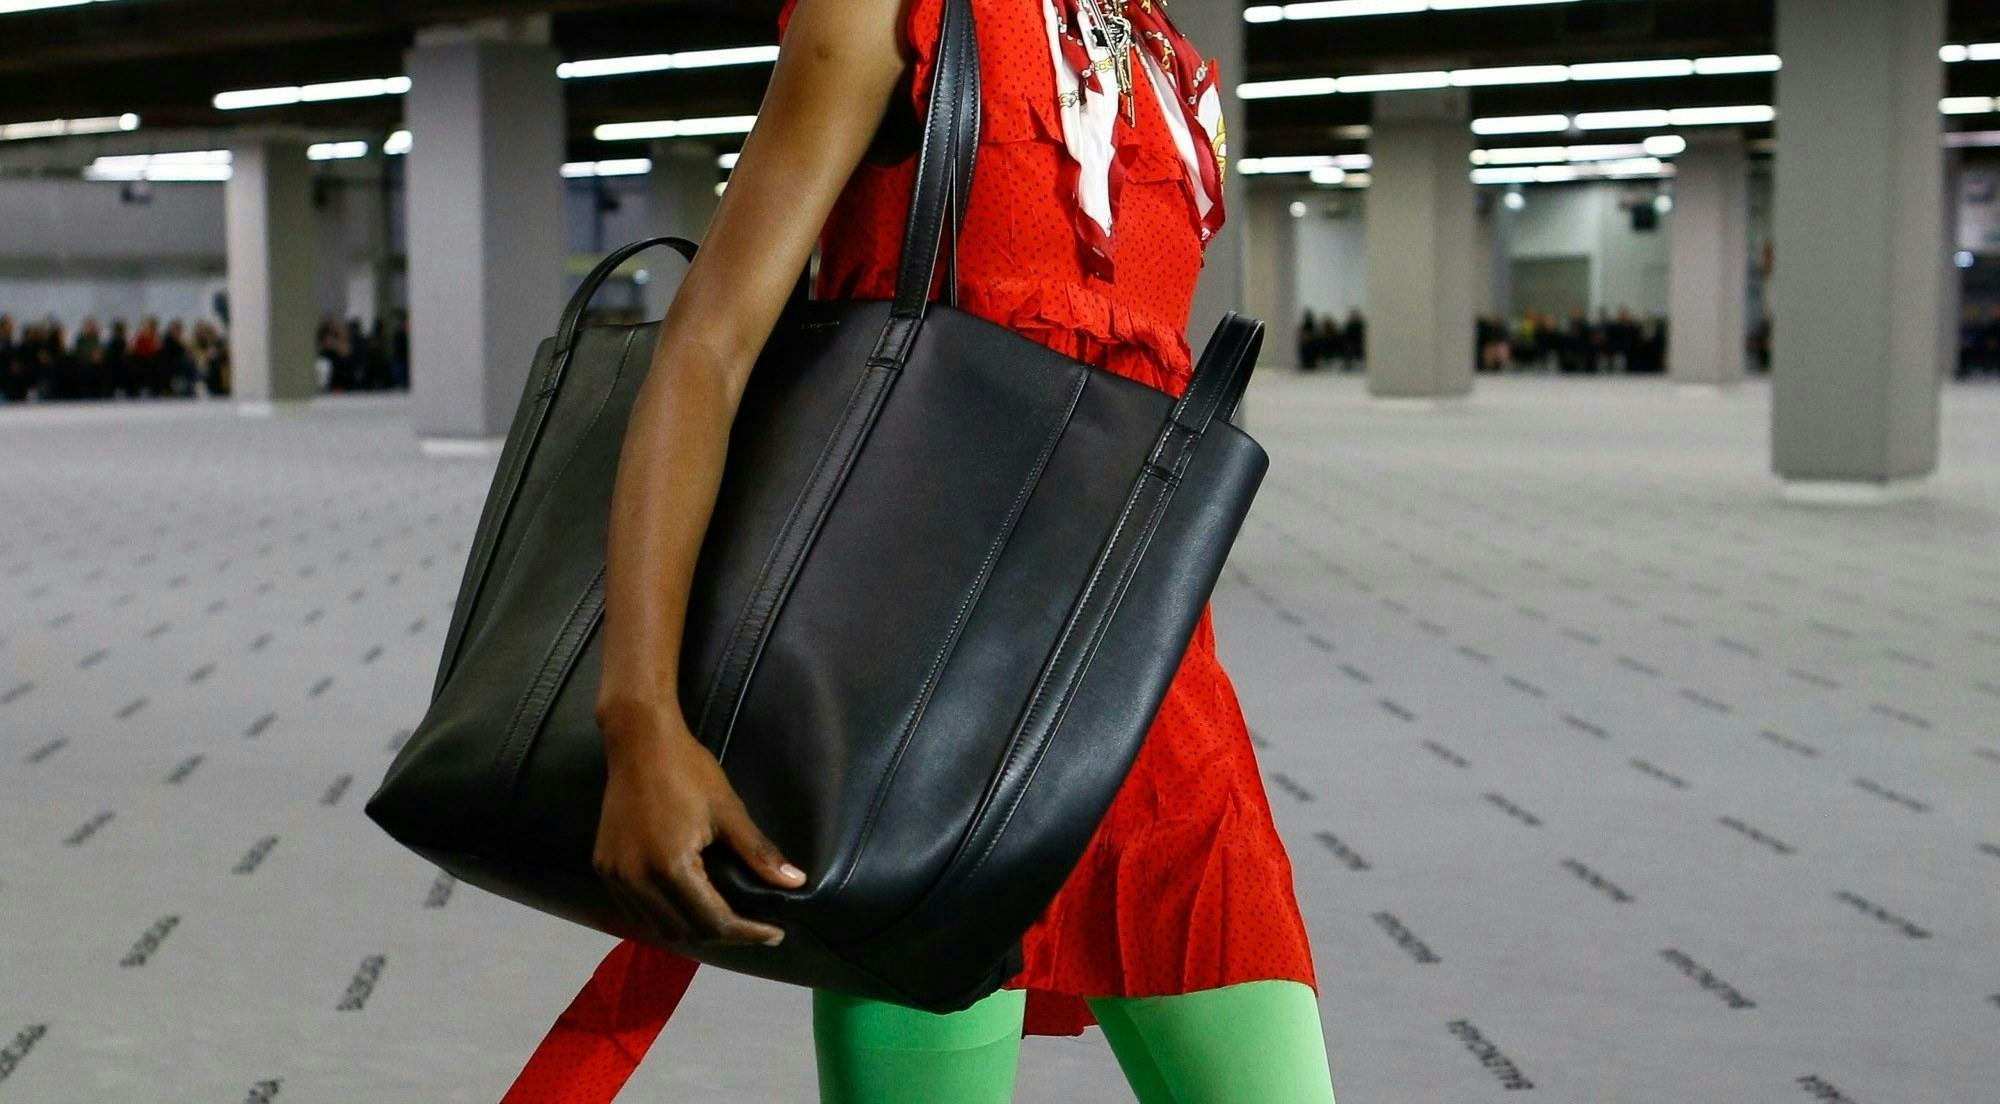 handbag bag accessories accessory person human clothing apparel purse